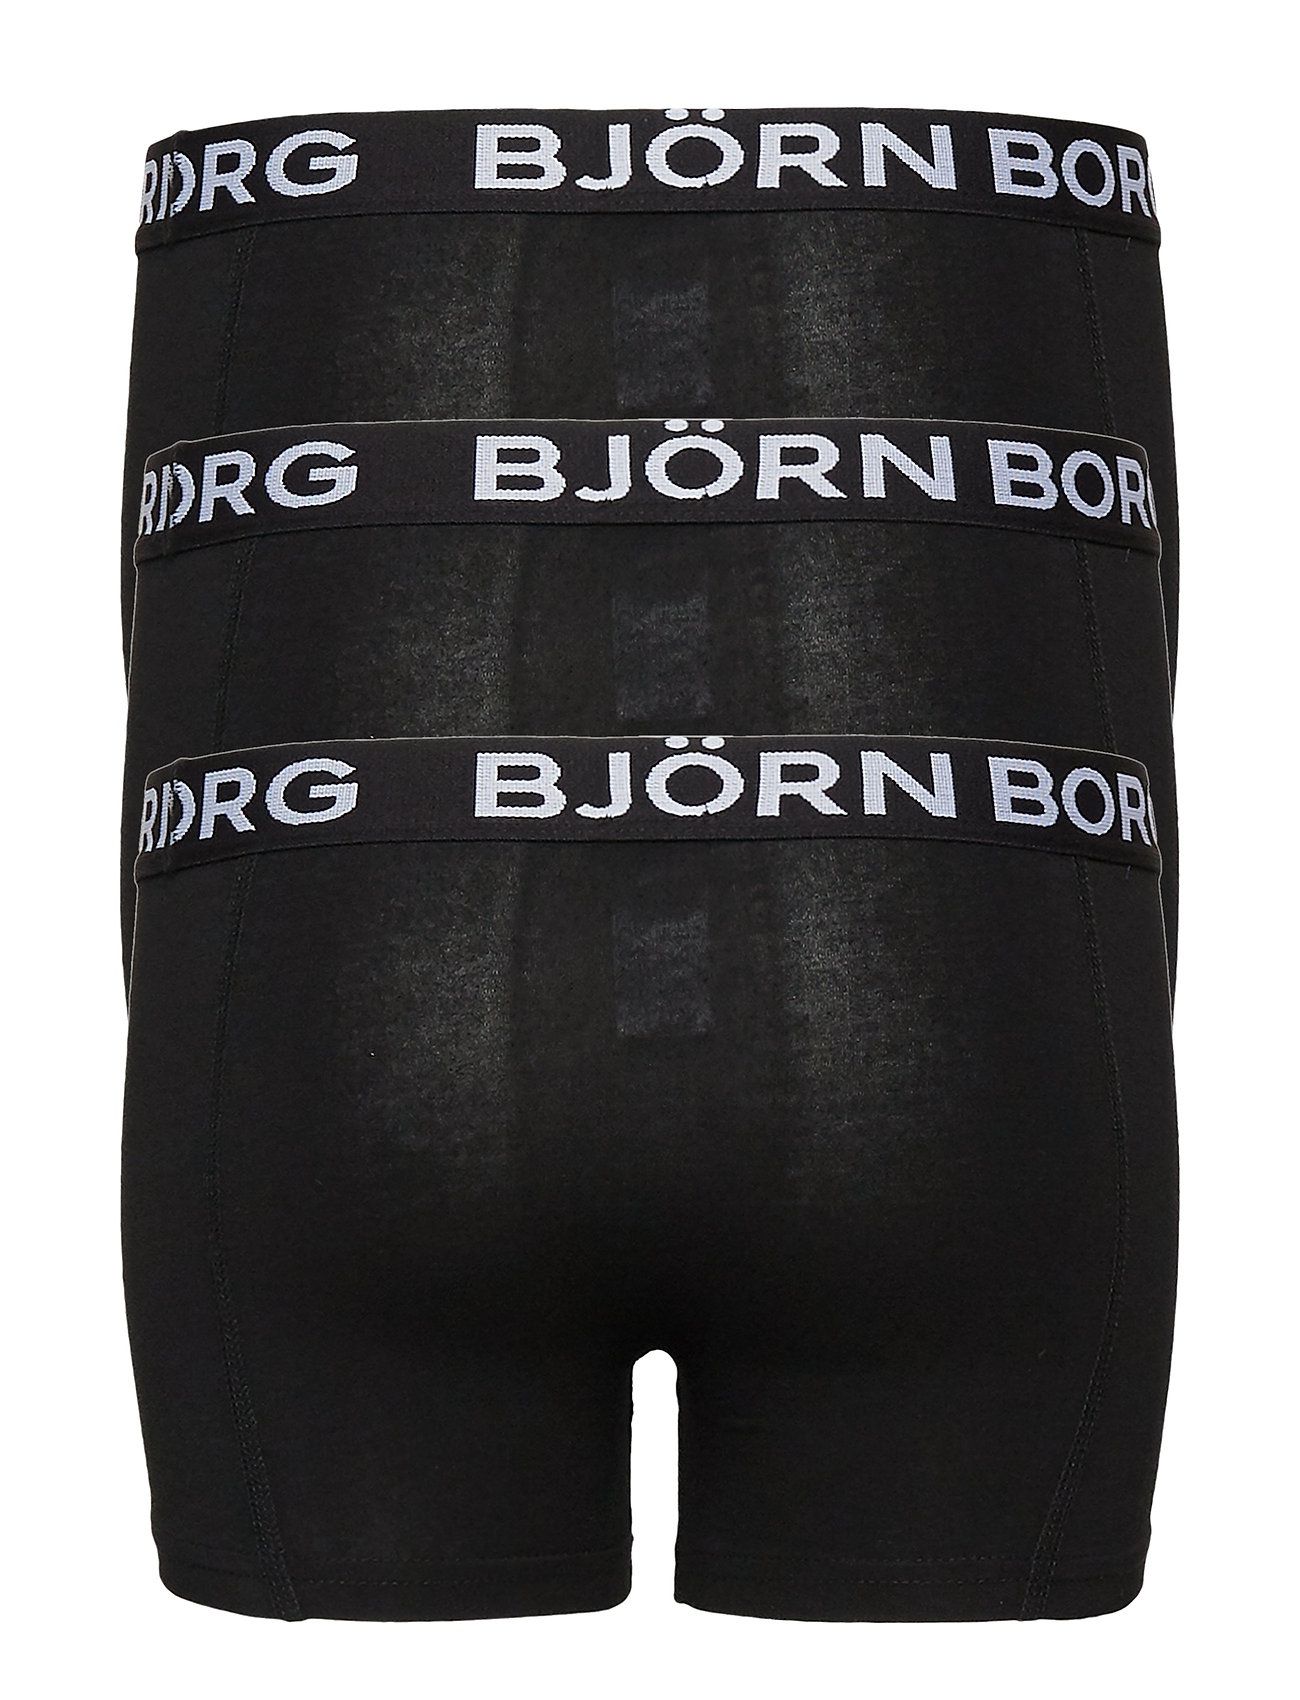 Björn Borg - CORE BOXER 3p - apatinės kelnaitės - multipack 2 - 1